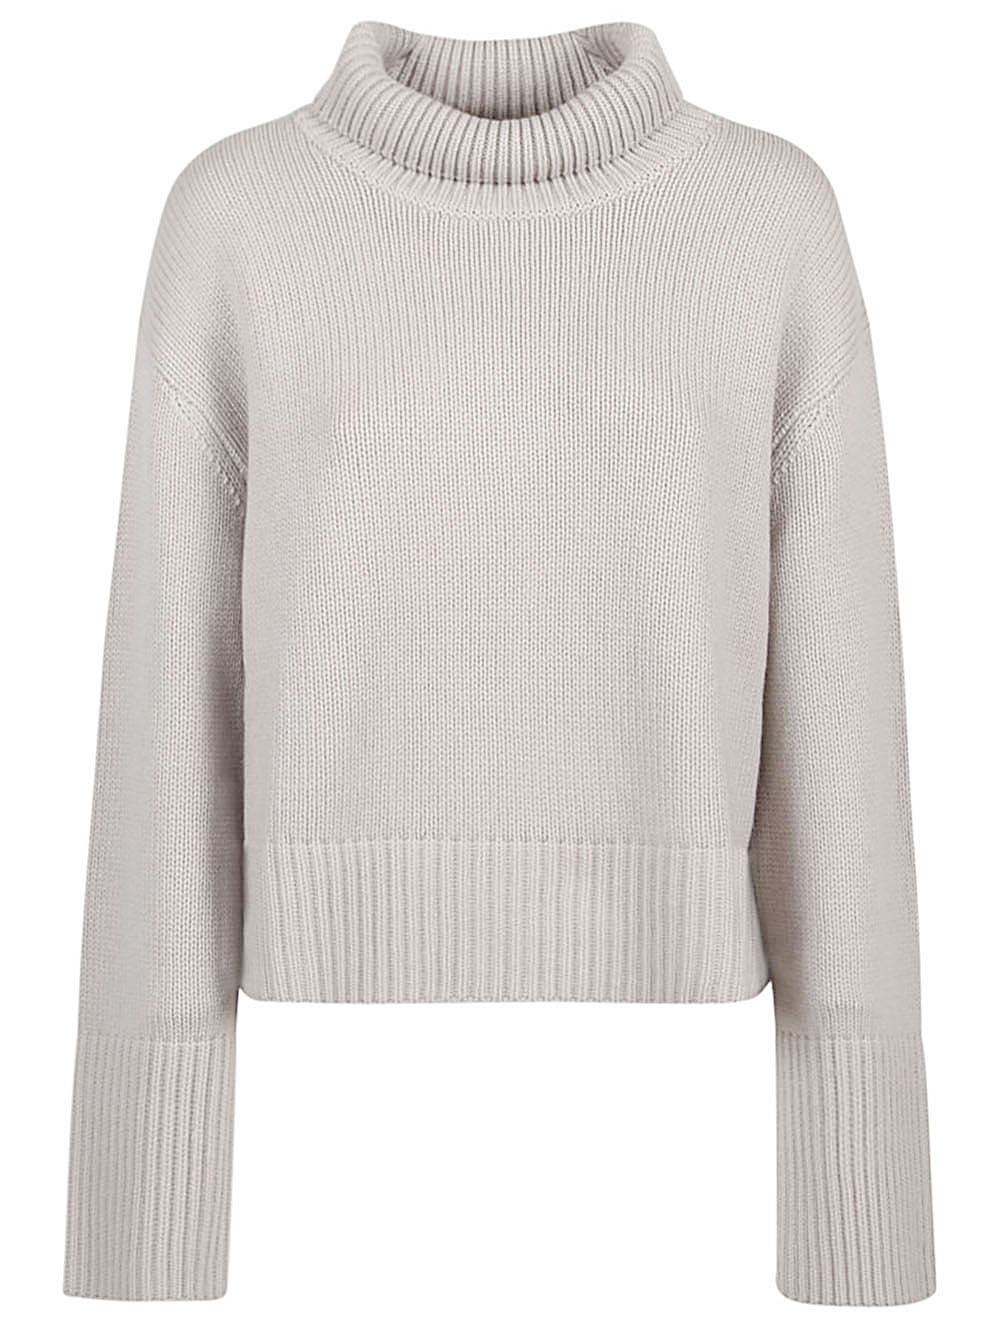 LISA YANG - The Fleur Cashmere Sweater Lisa Yang